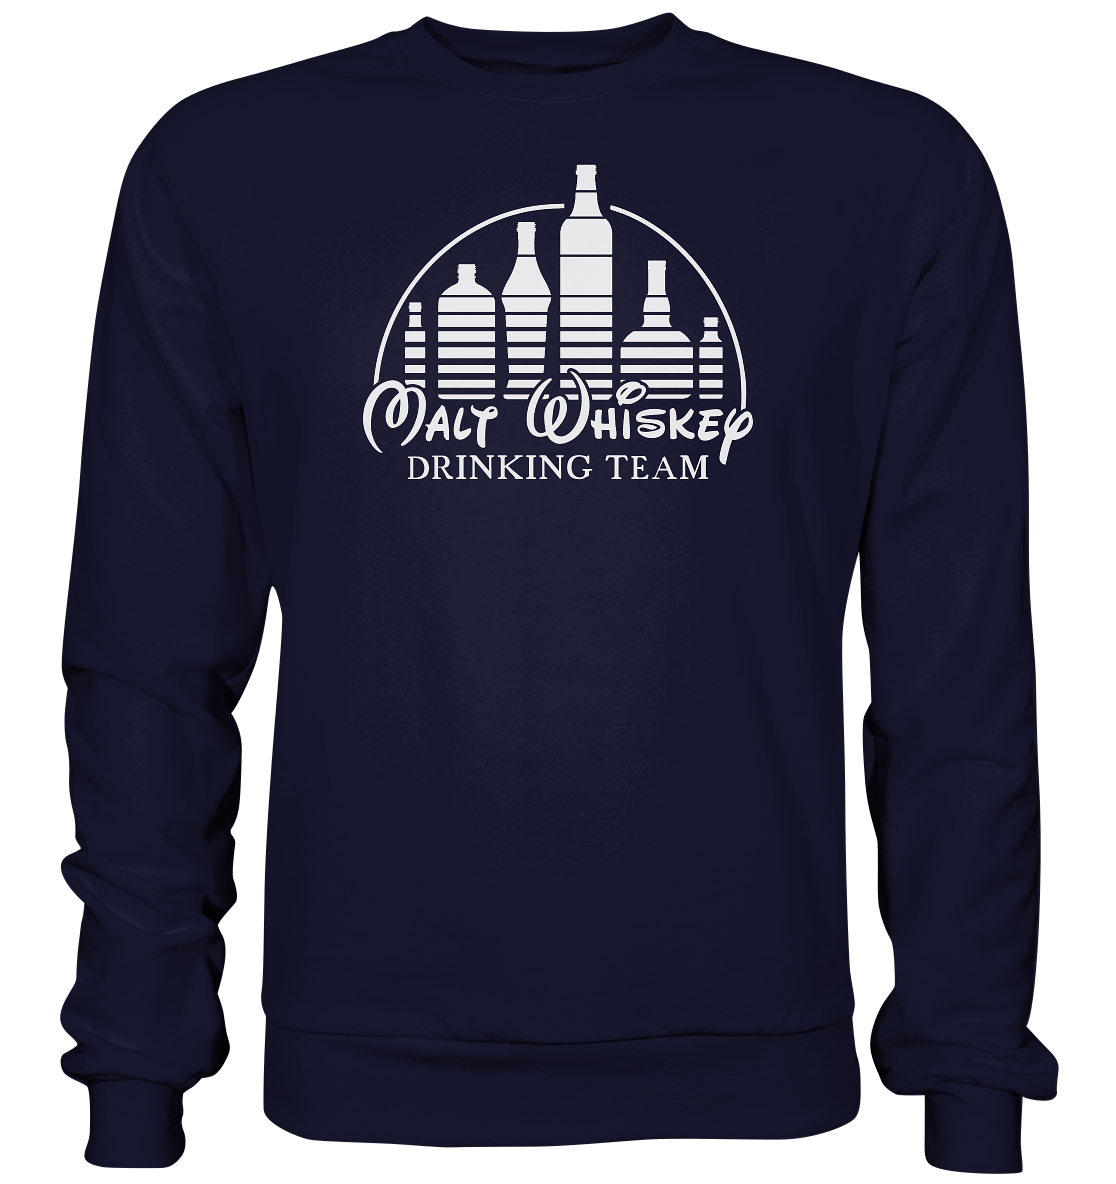 Malt Whiskey "Drinking Team" - Basic Sweatshirt